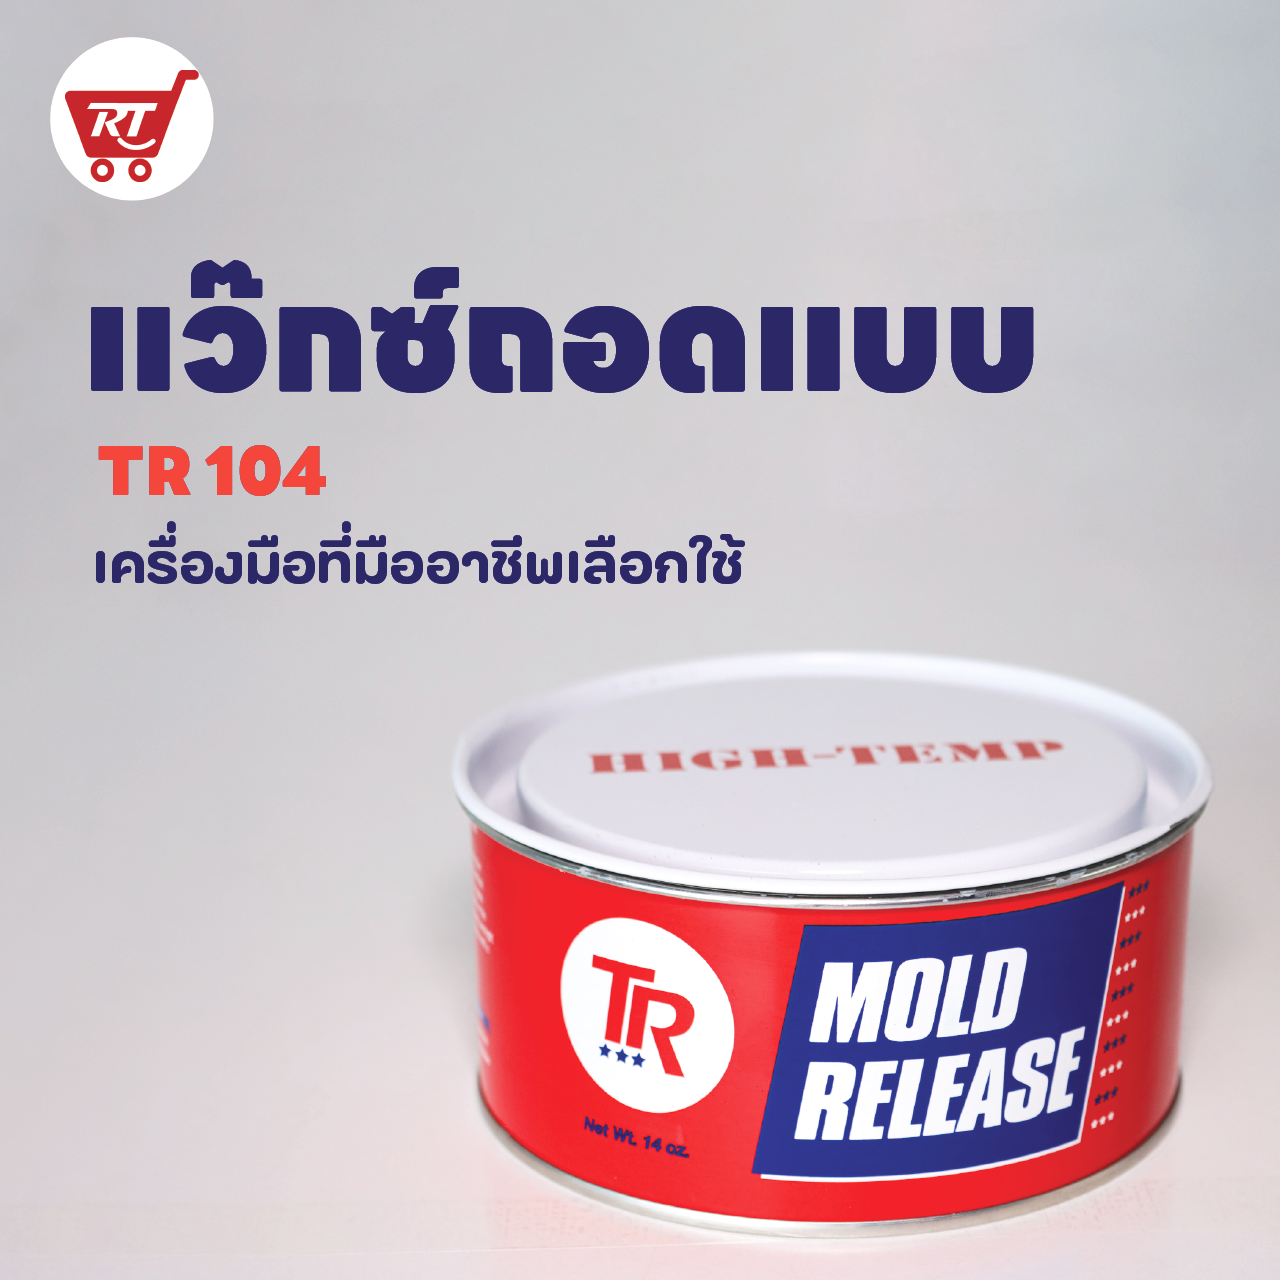 TR - High-Temp Wax Mold Release - 14 oz